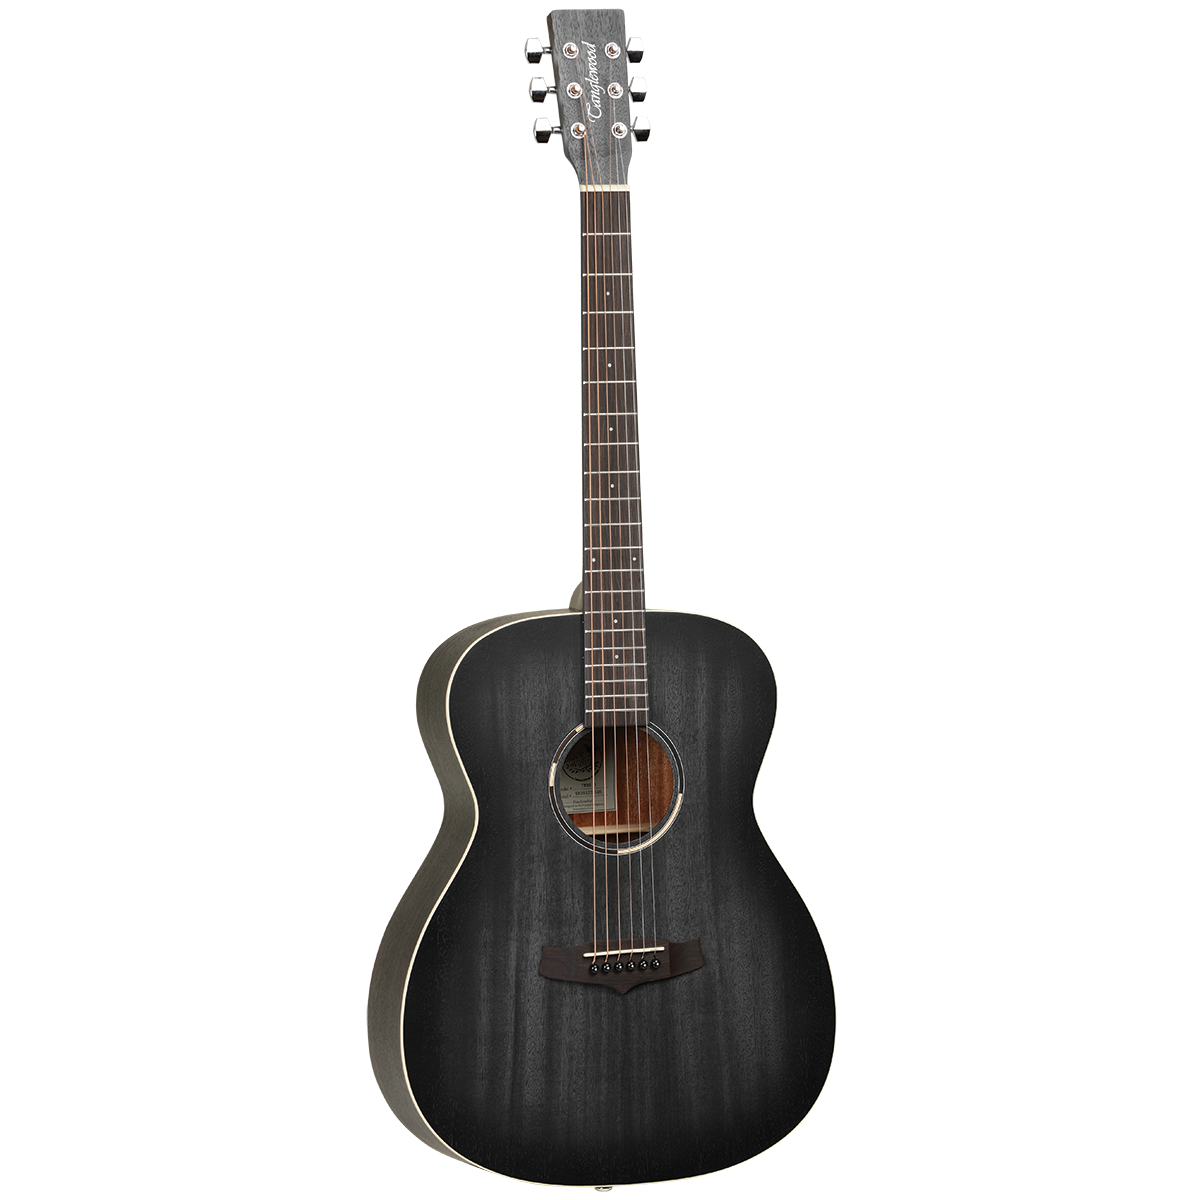 Tanglewood Twbbo Blackbird Ochestra Acoustic Guitar